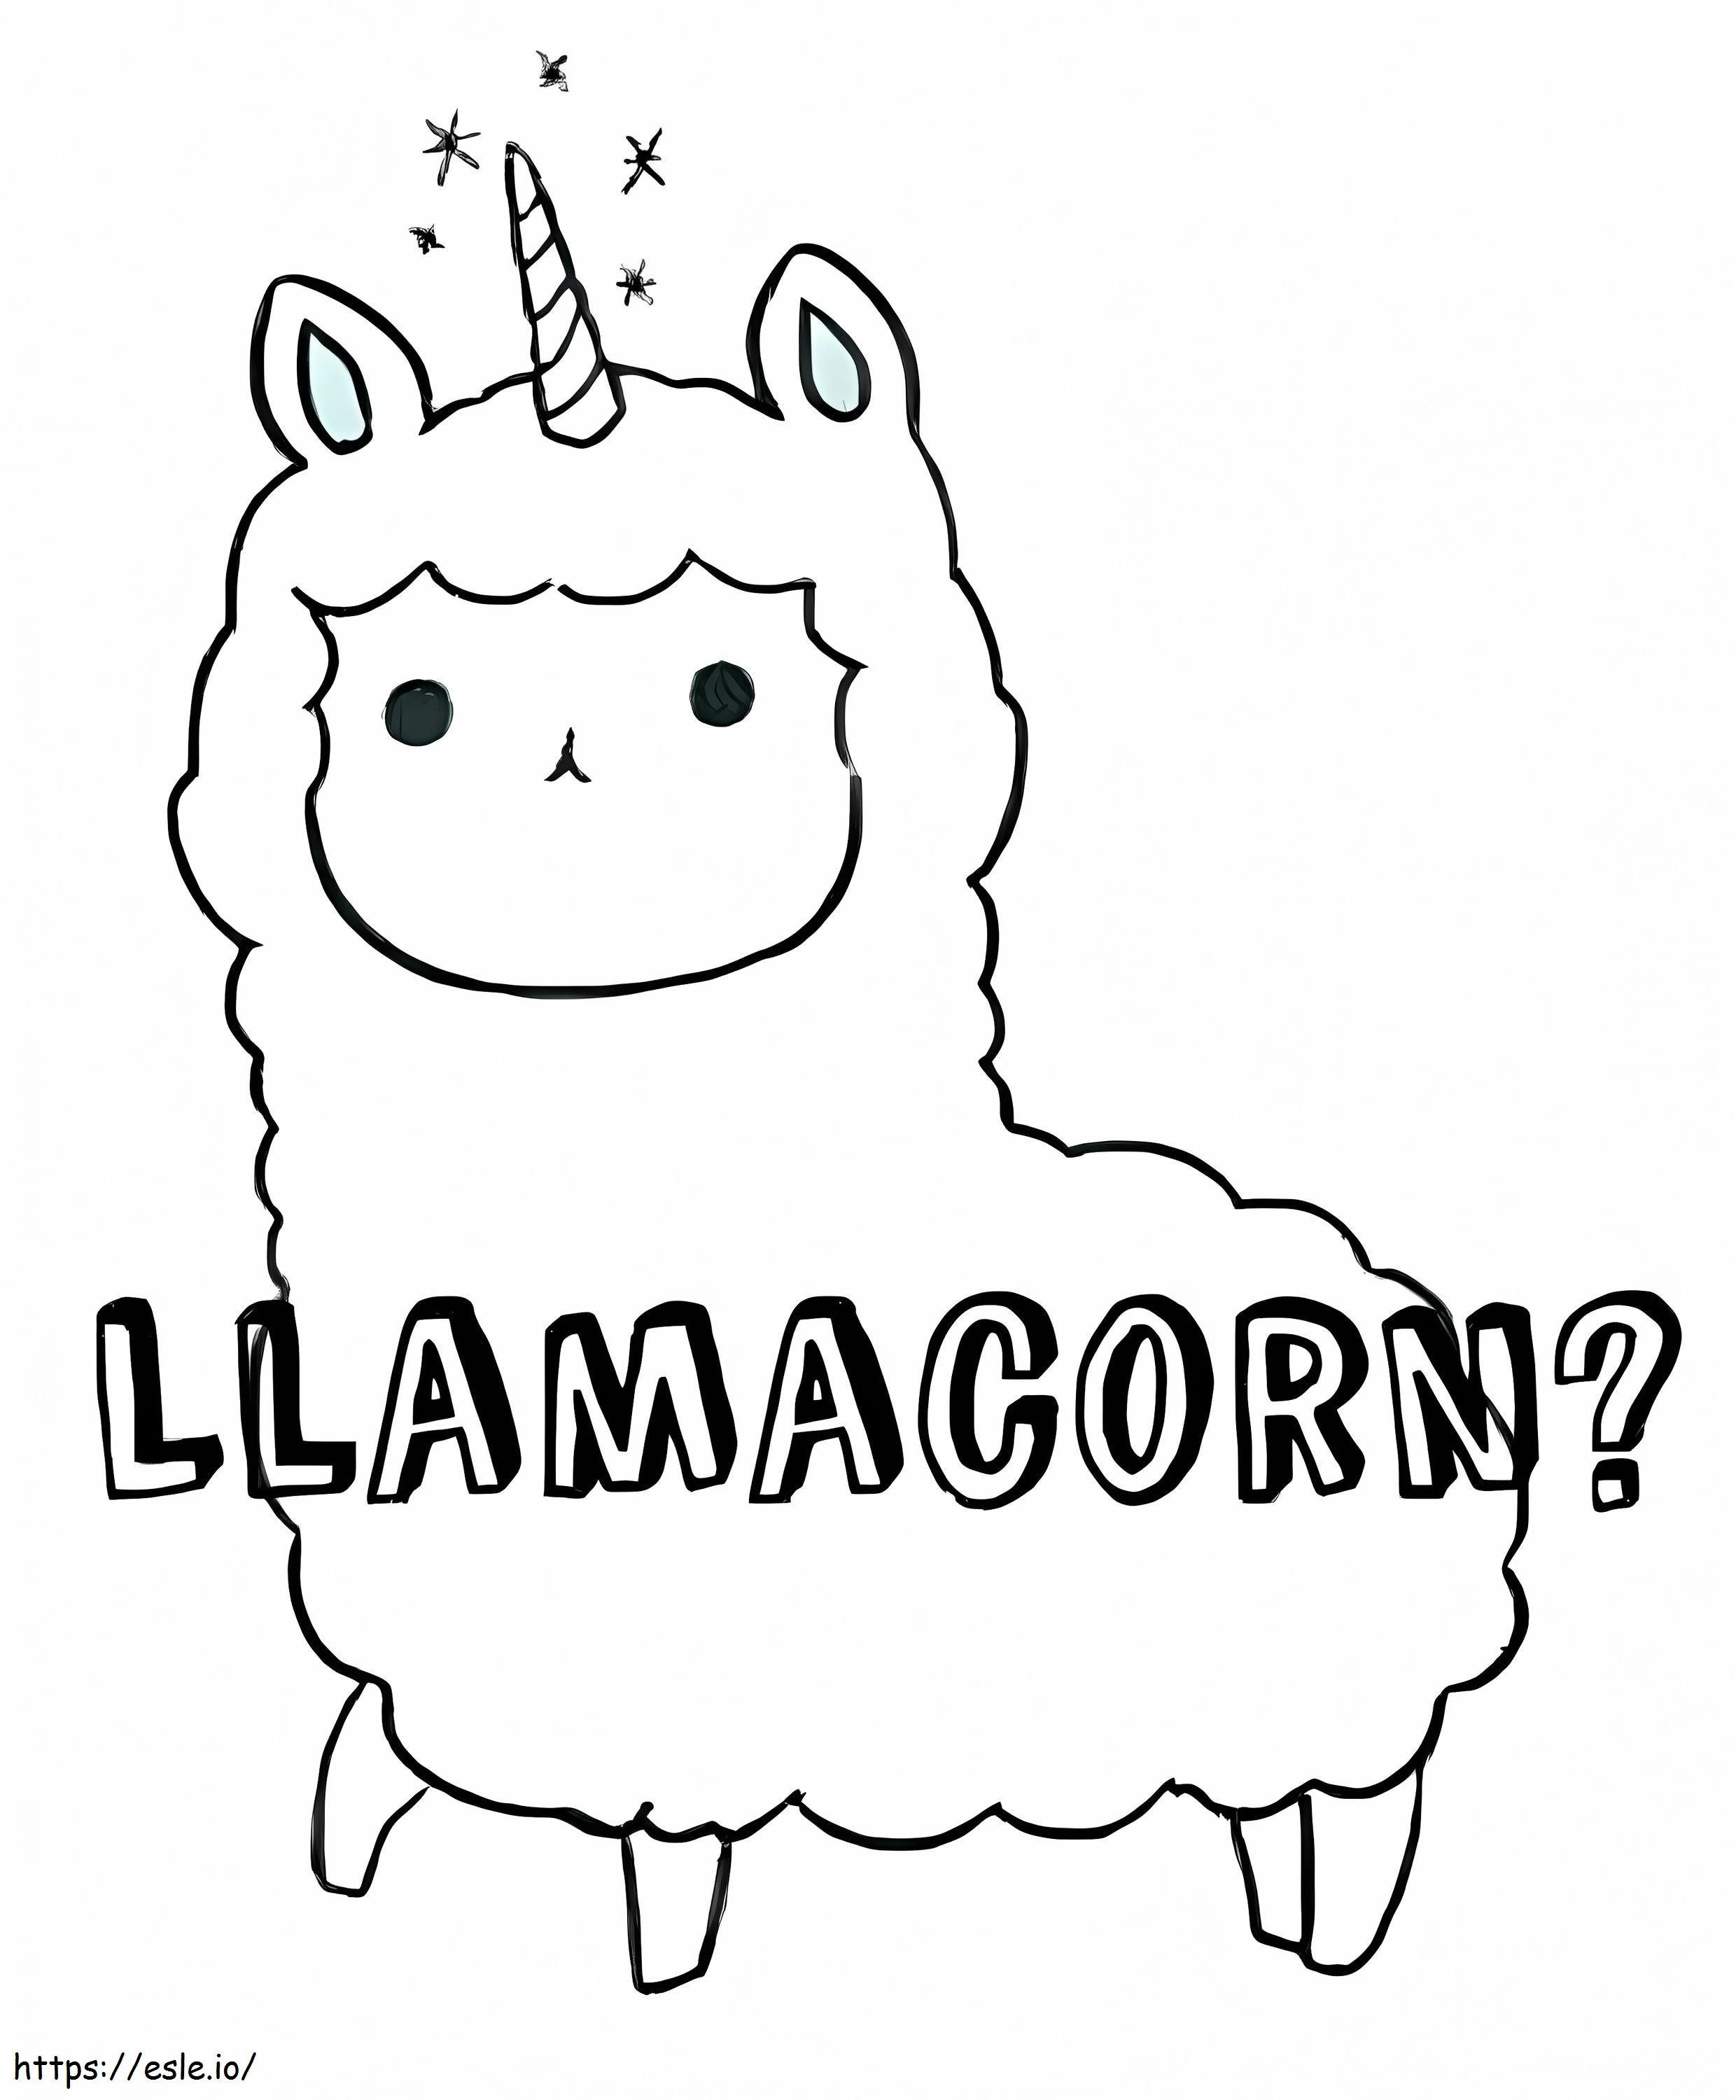 Adorable Llamacorn coloring page